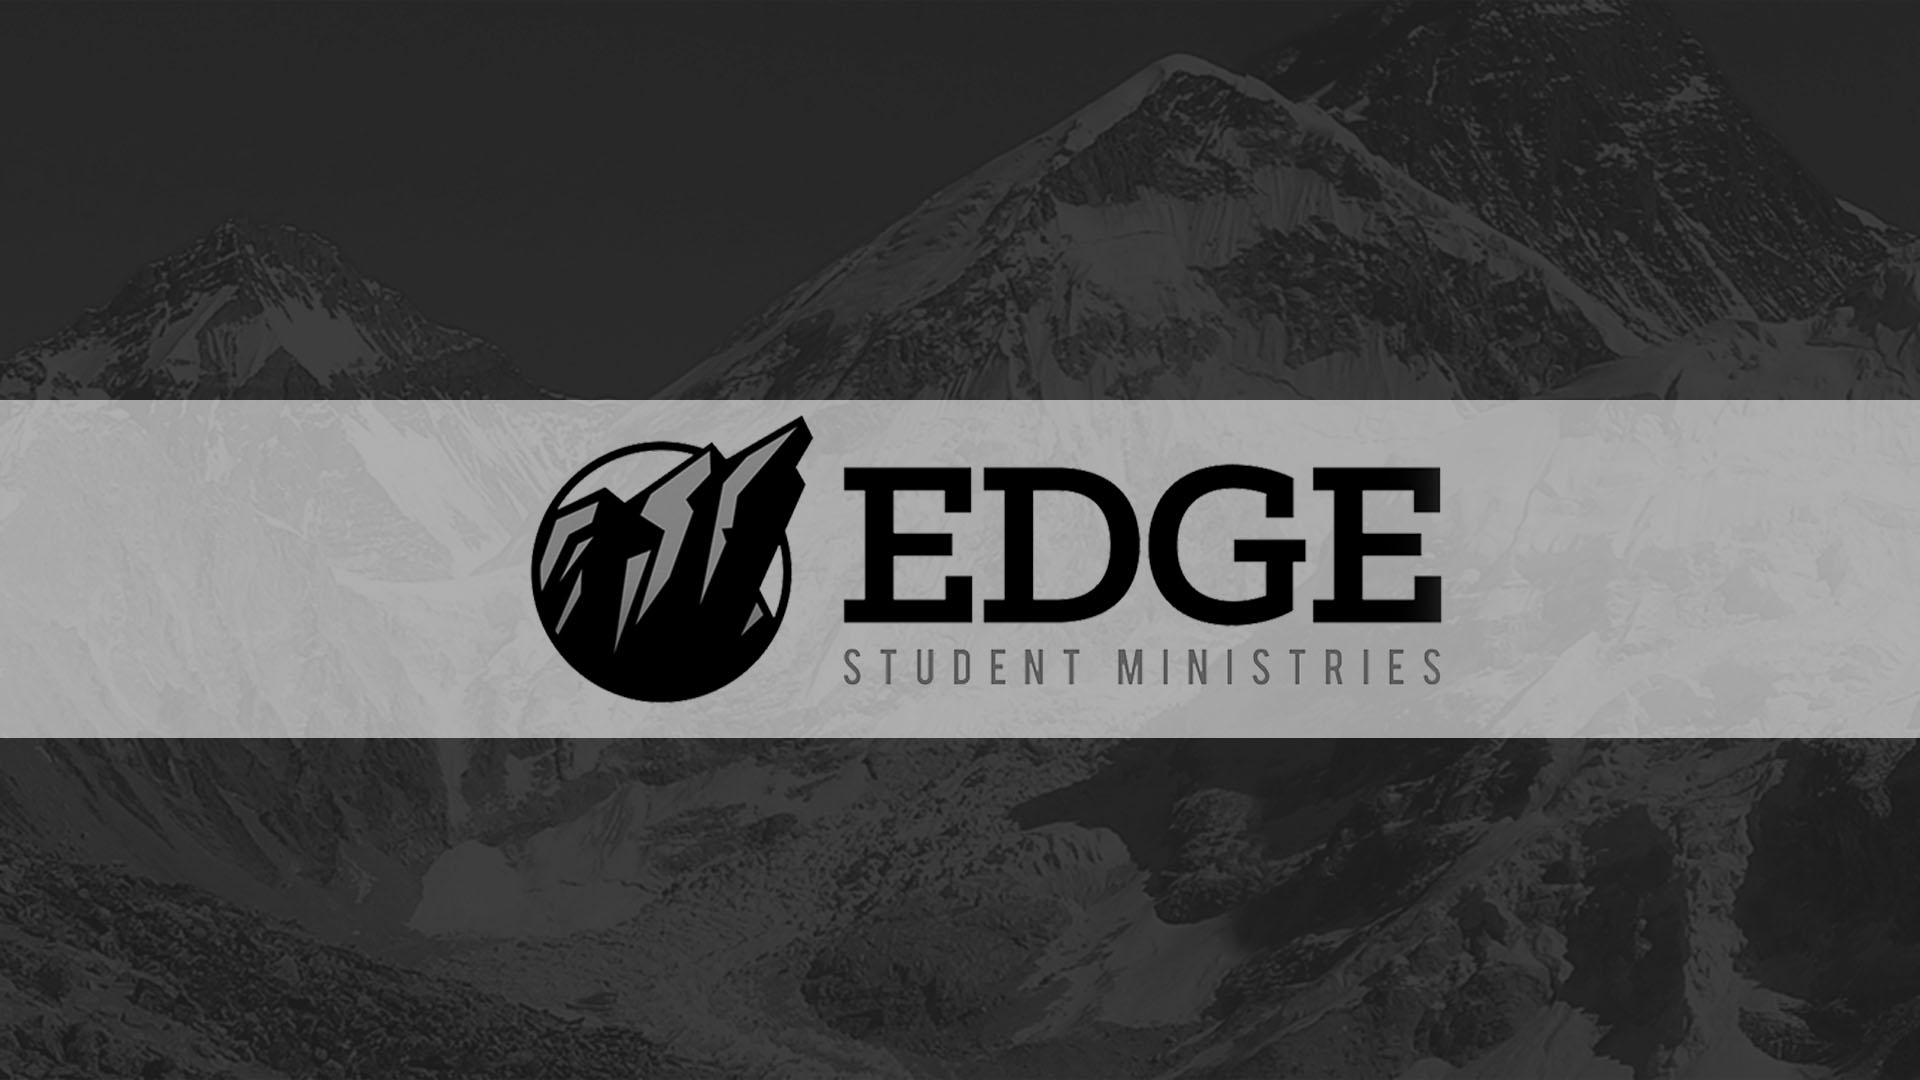 EdgeStudent Ministries